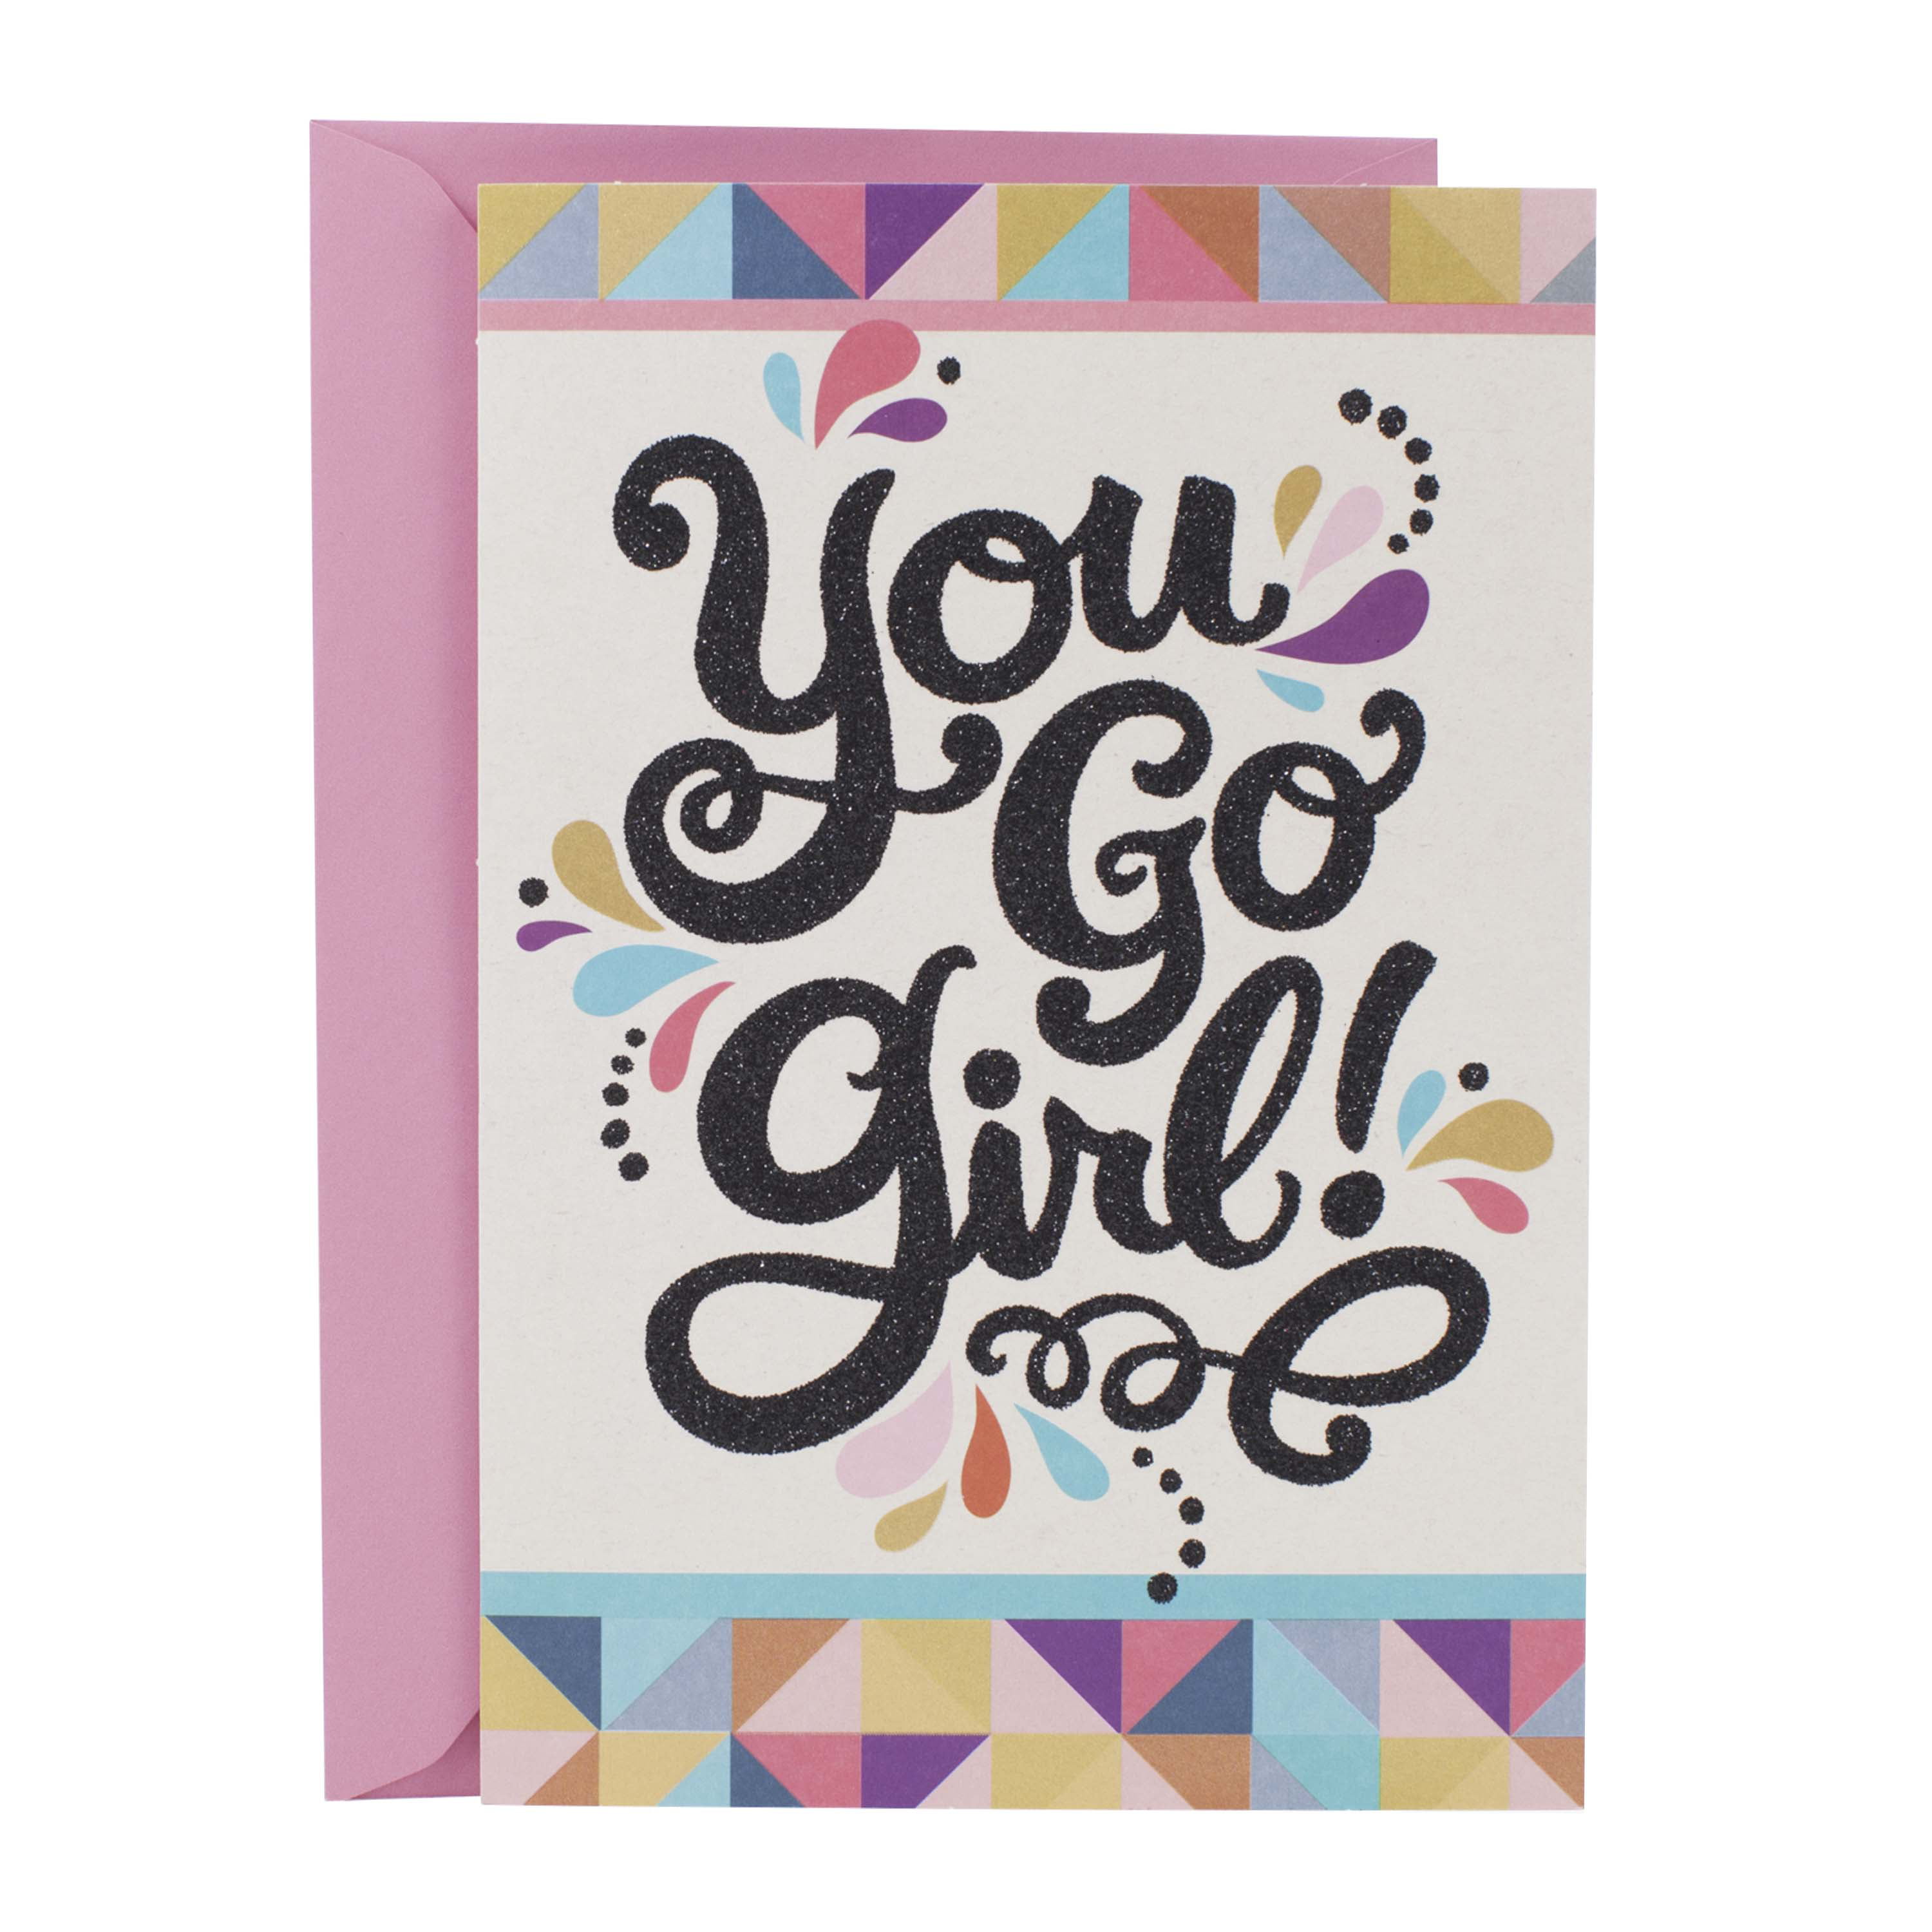 hallmark-mahogany-congratulations-greeting-card-you-go-girl-walmart